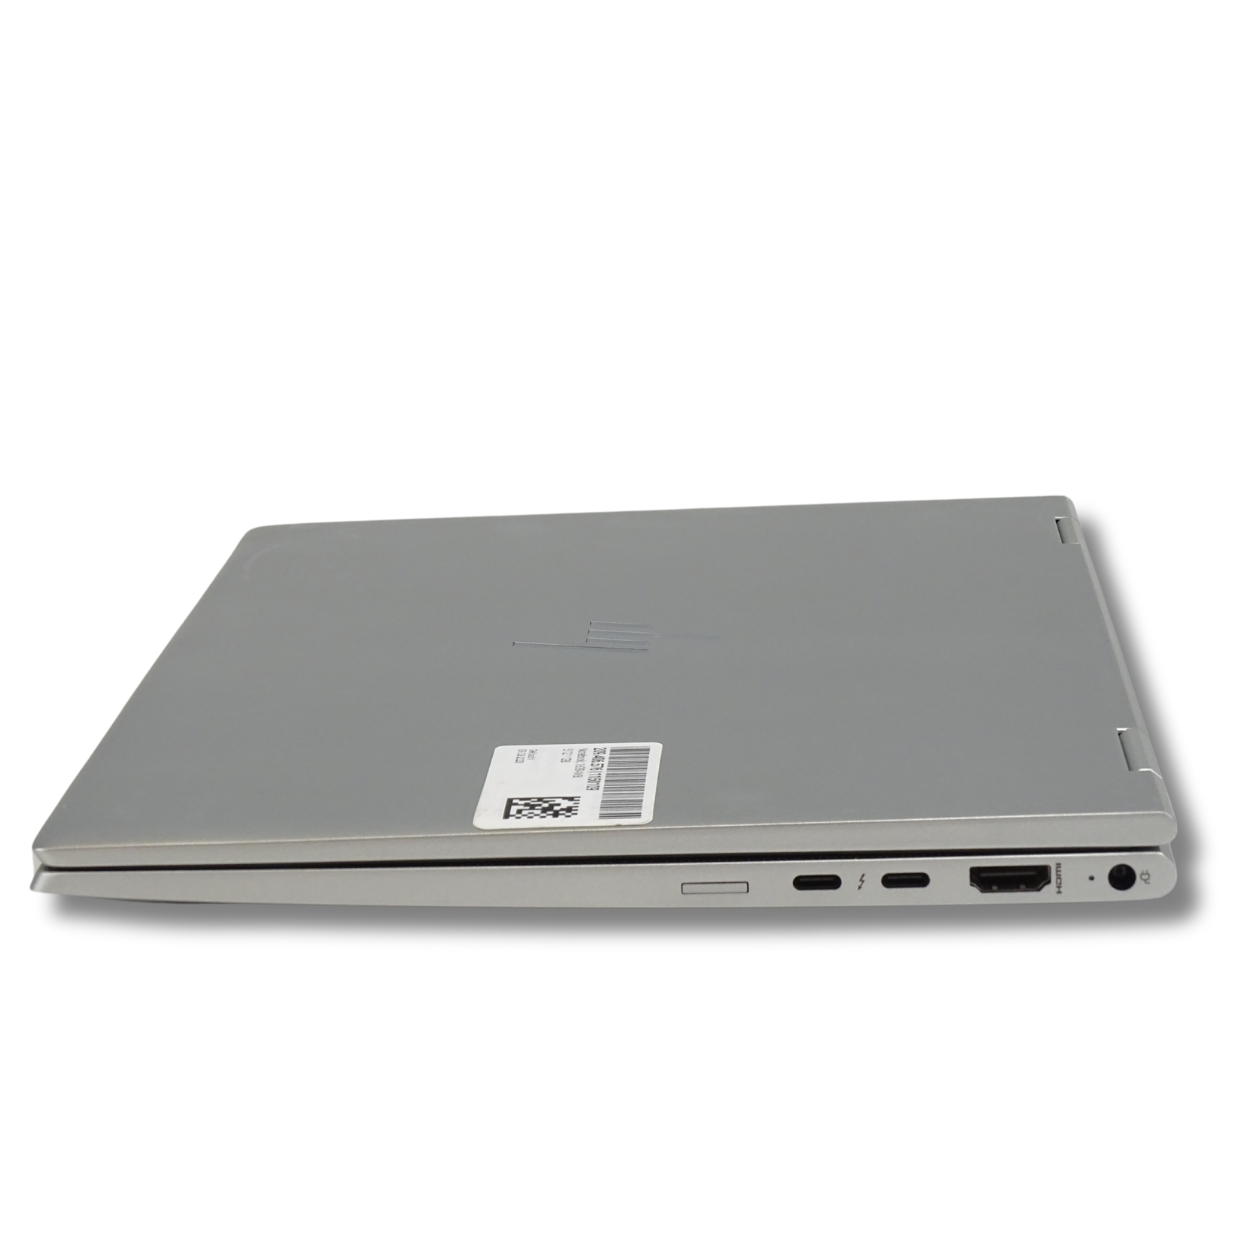 HP EliteBook x360 830 G8 

 - 13,3 Zoll - Intel Core i5 1135G7 @ 2,4 GHz - 16 GB - 512 GB SSD - 1920 x 1080 FHD - Touchscreen - Windows 10 Professional - Sehr gut